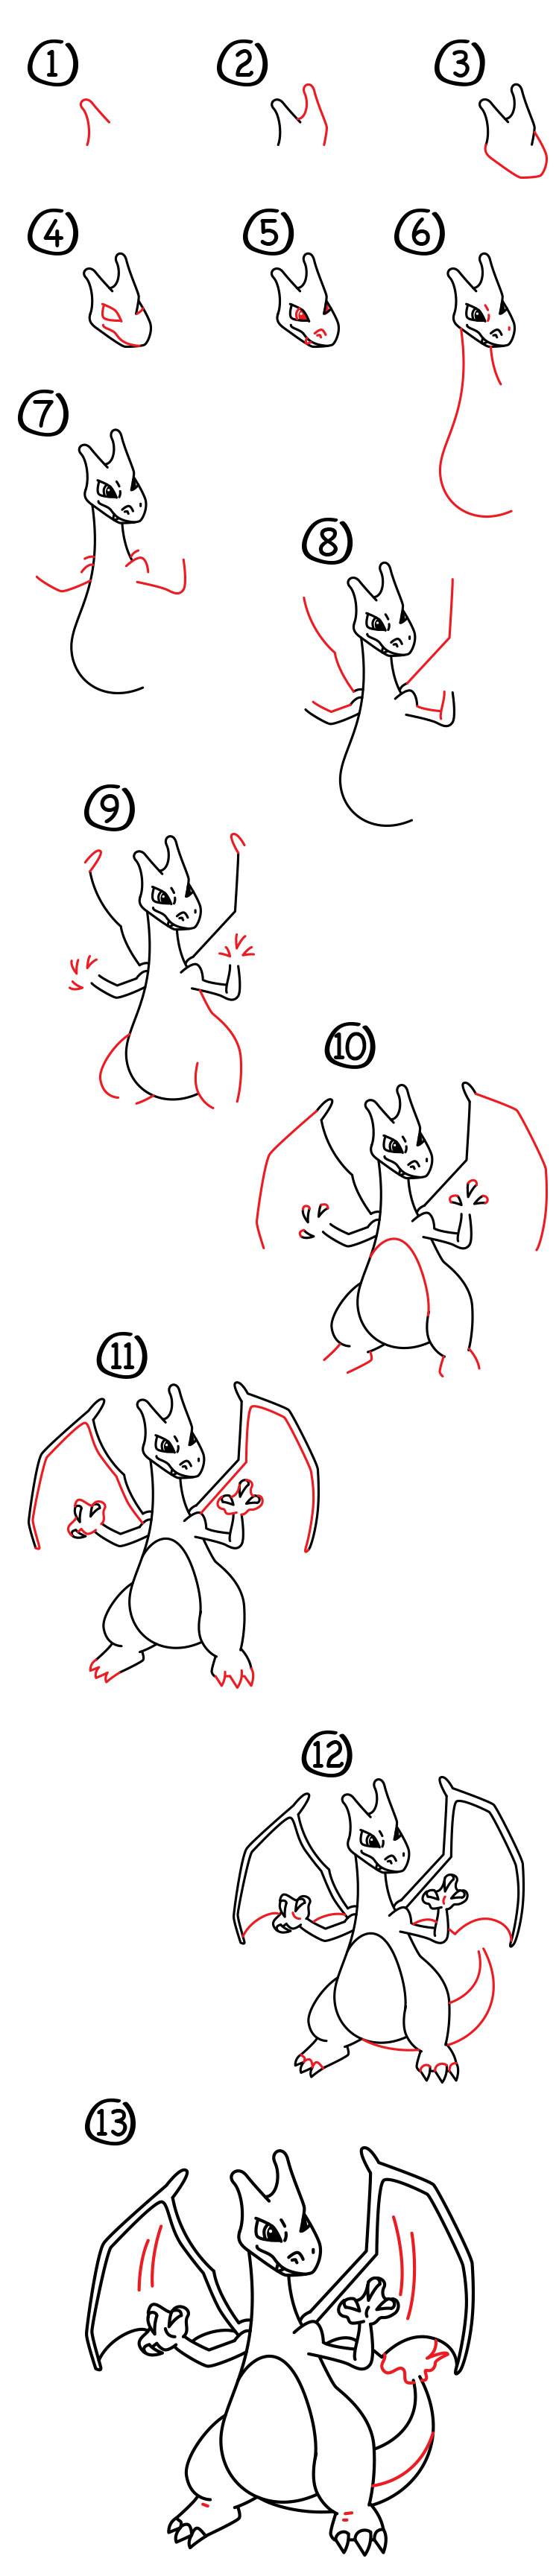 How To Draw Charizard Pokemon - Art For Kids Hub